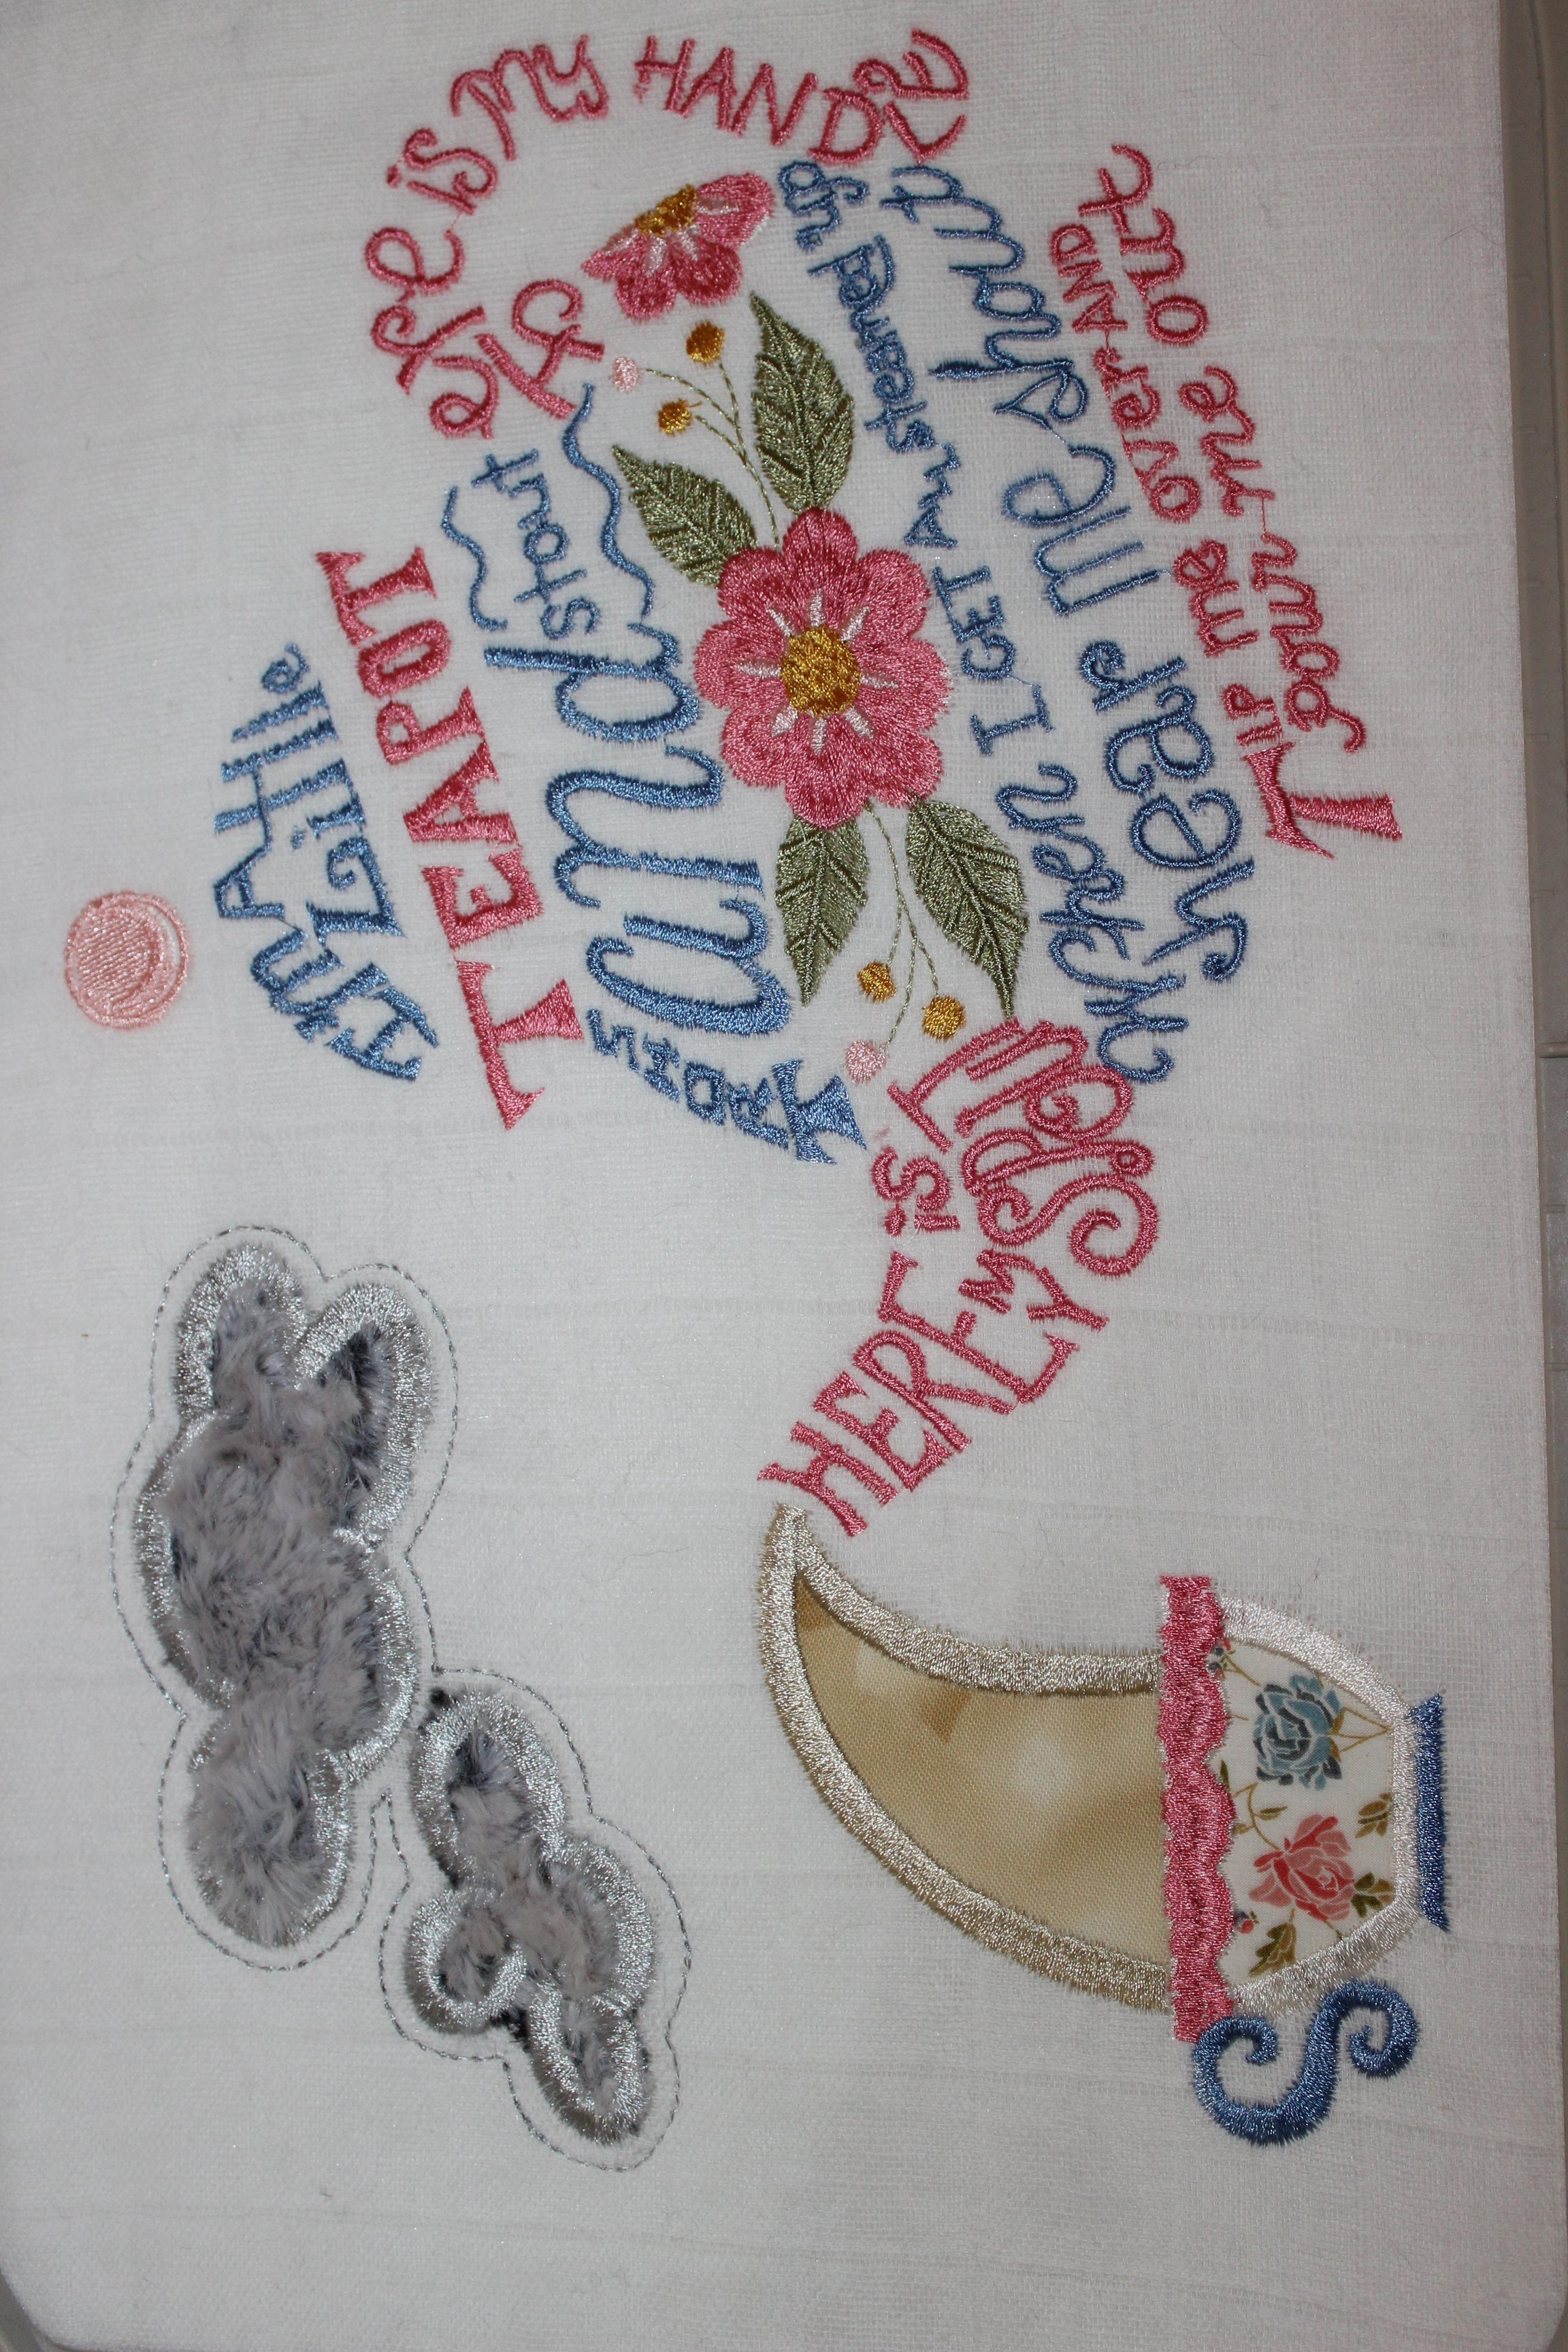 Grandmother's Flower Garden - Sashiko World America Stamped Embroidery Kit